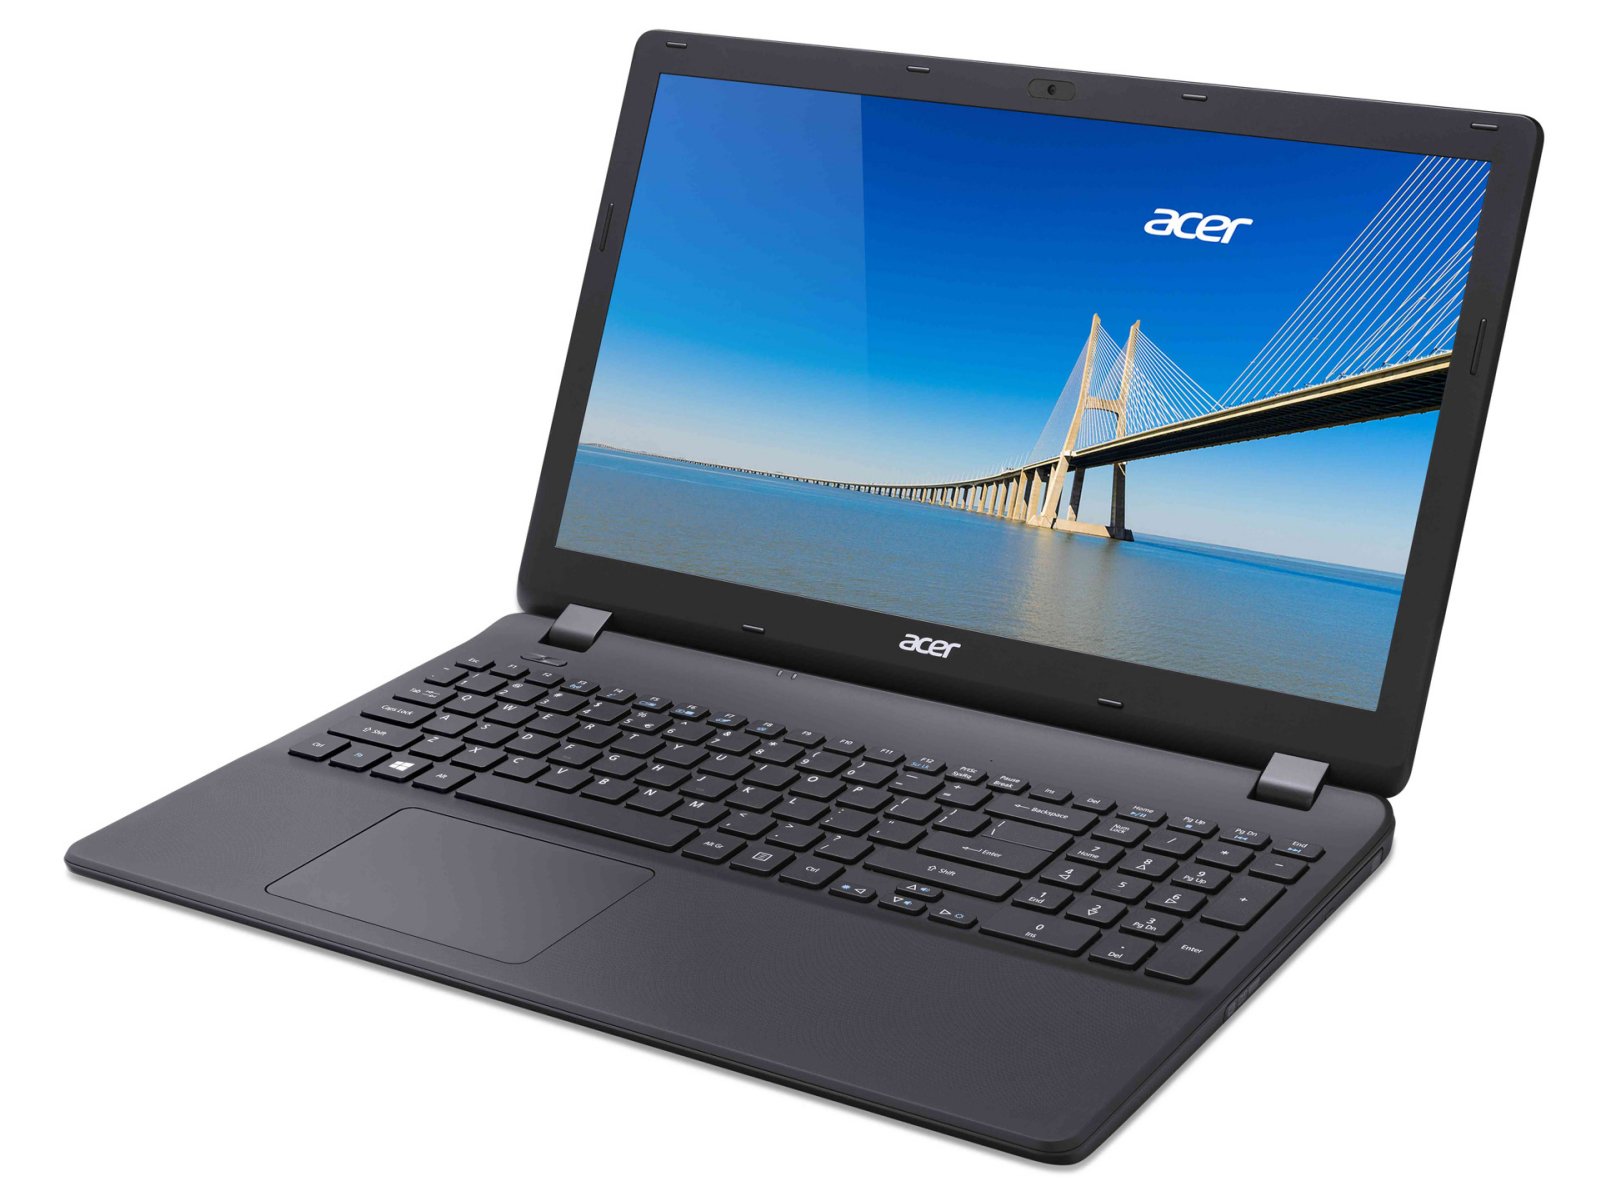 Ноутбук Acer Ex2519 Цена